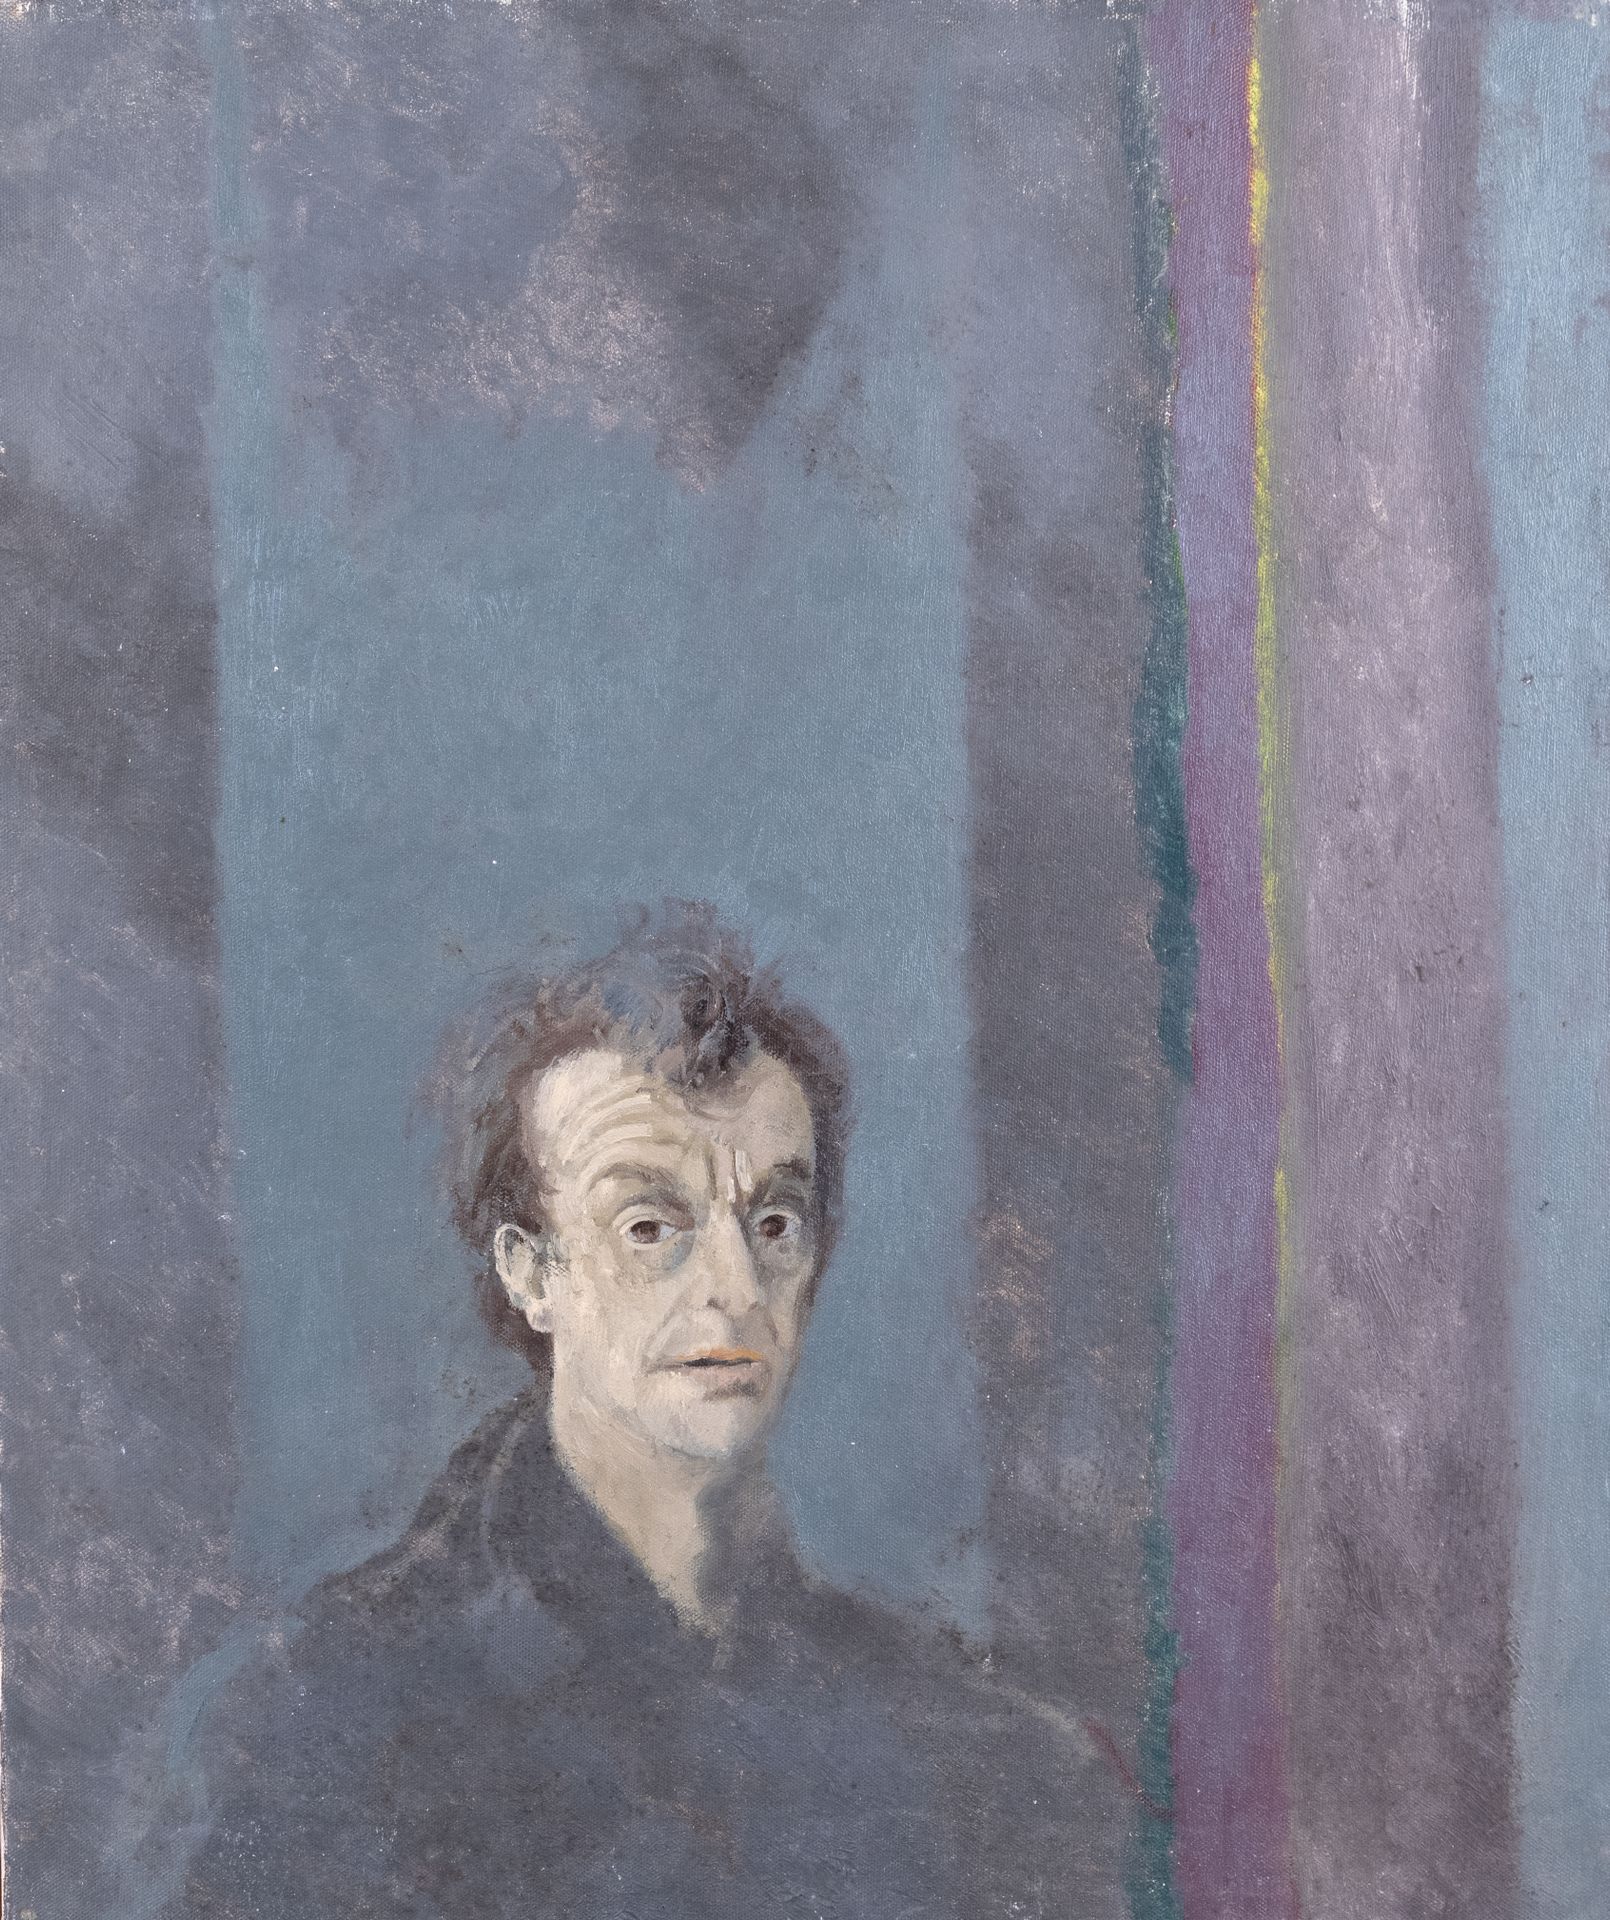 Null 让-克劳德-贝松-吉拉尔 (1938-2021)

自画像

布面油画，无签名

61 x 50,5 cm